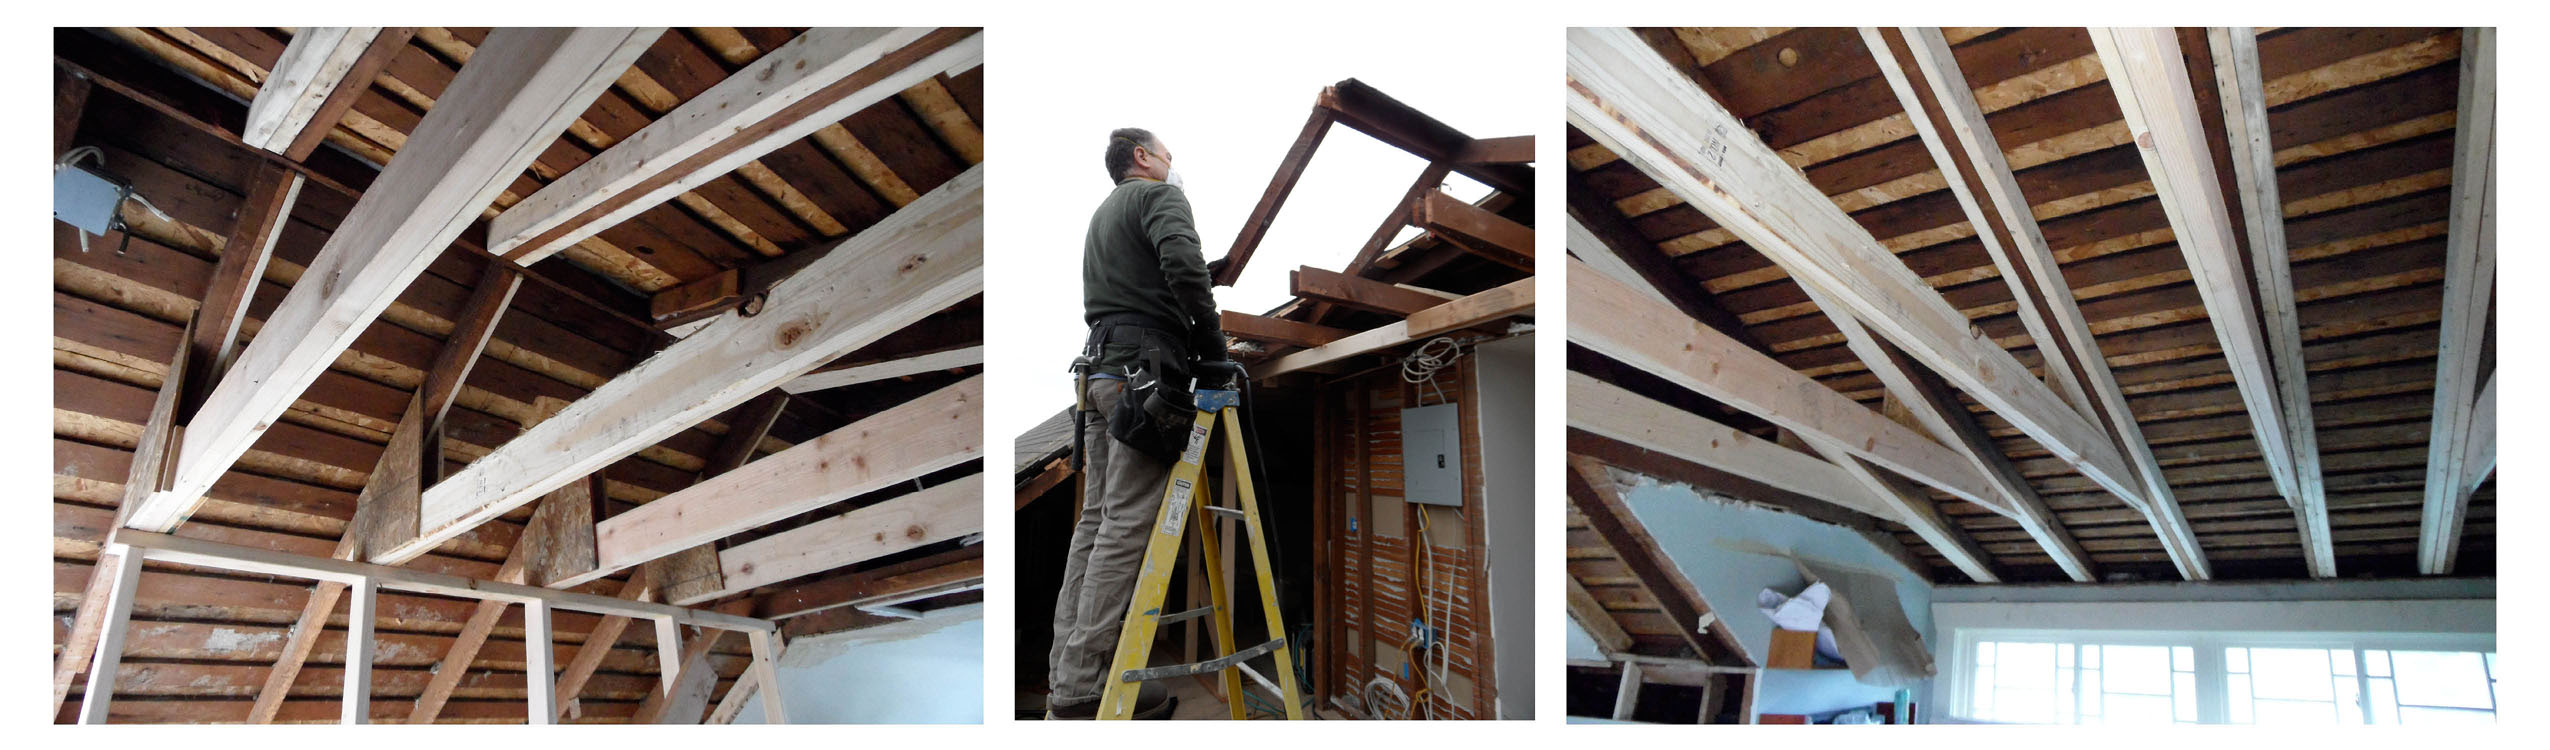  retrofit roof framing